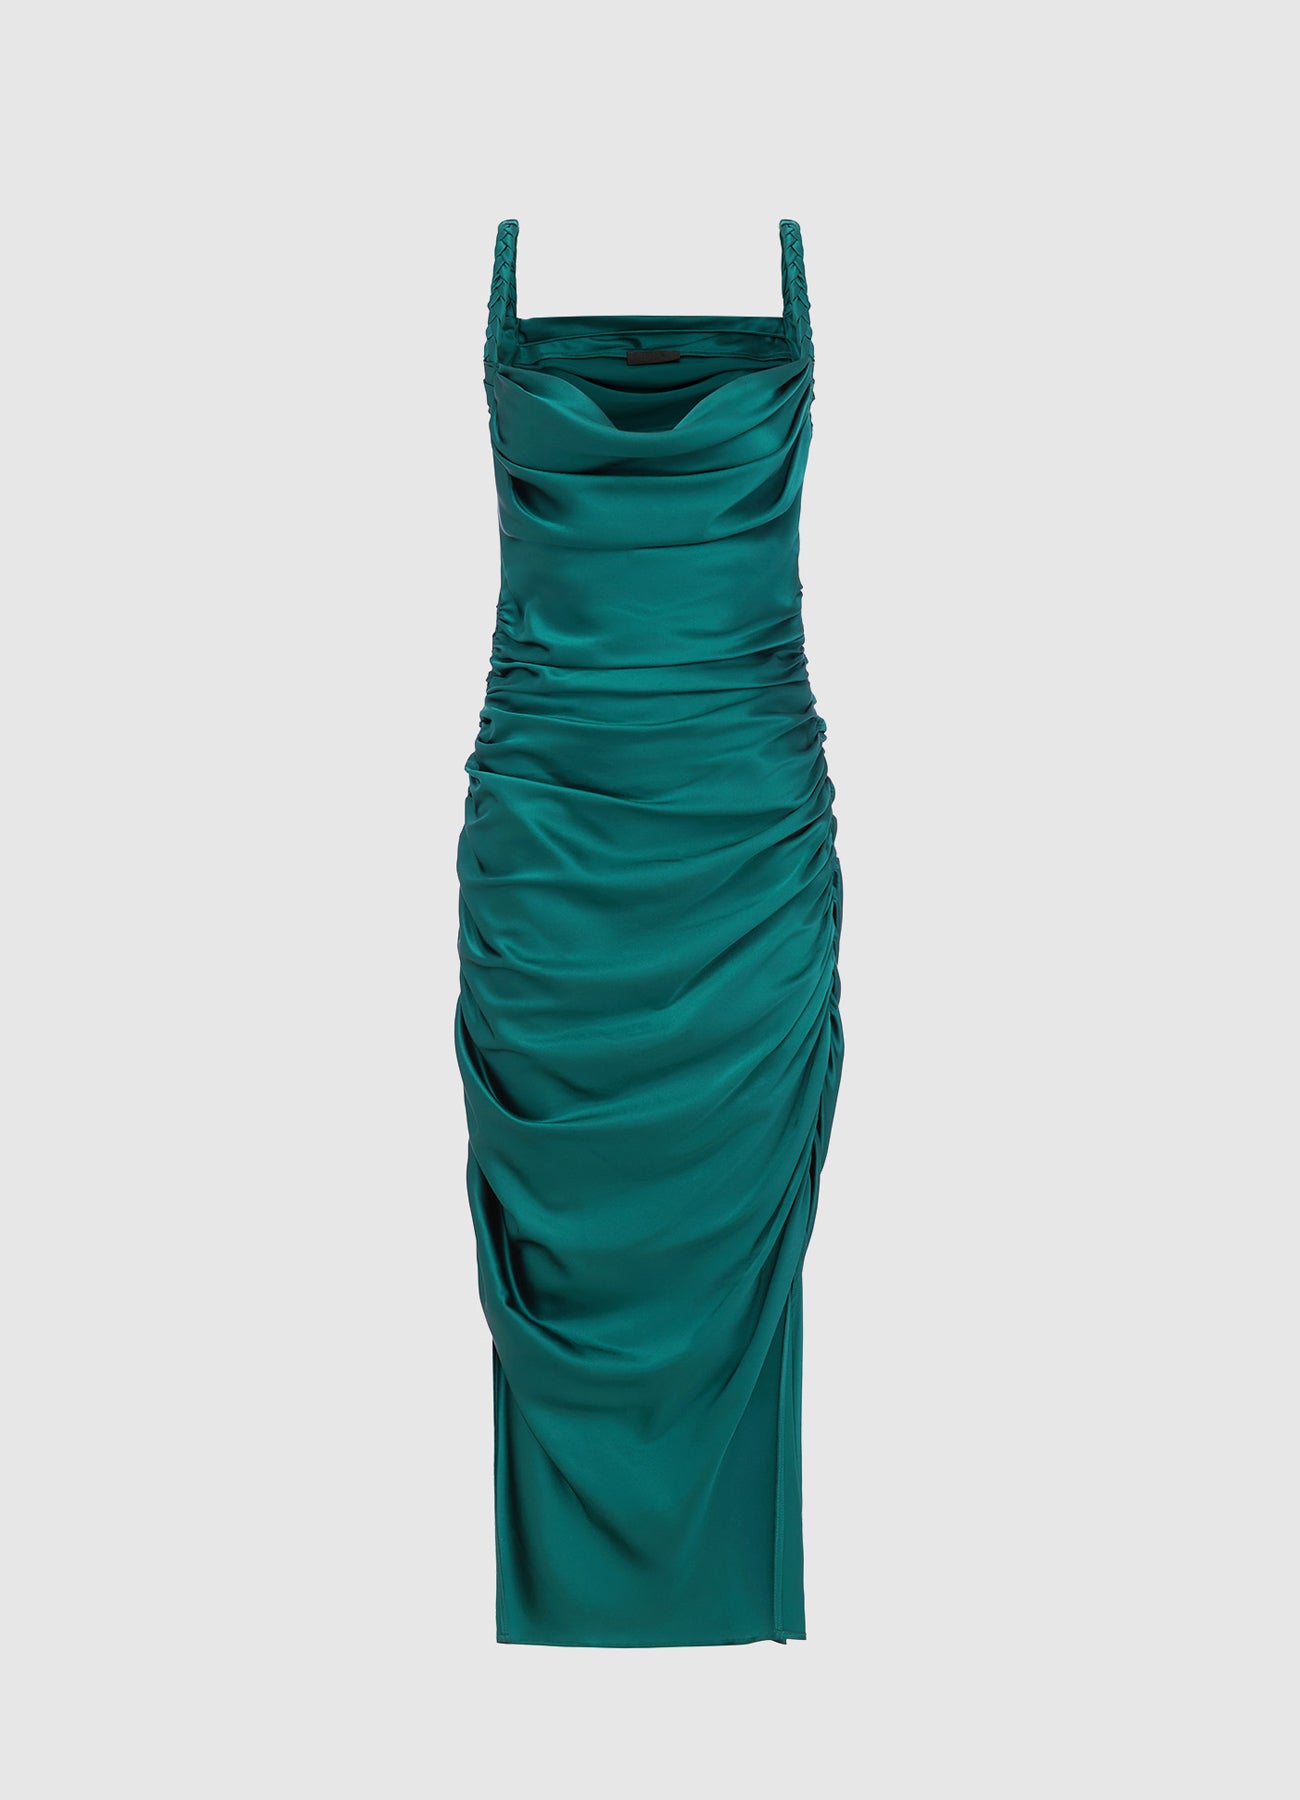 Rachel Cowl Neck Slip Dress - Teal | LEO LIN® Official Website